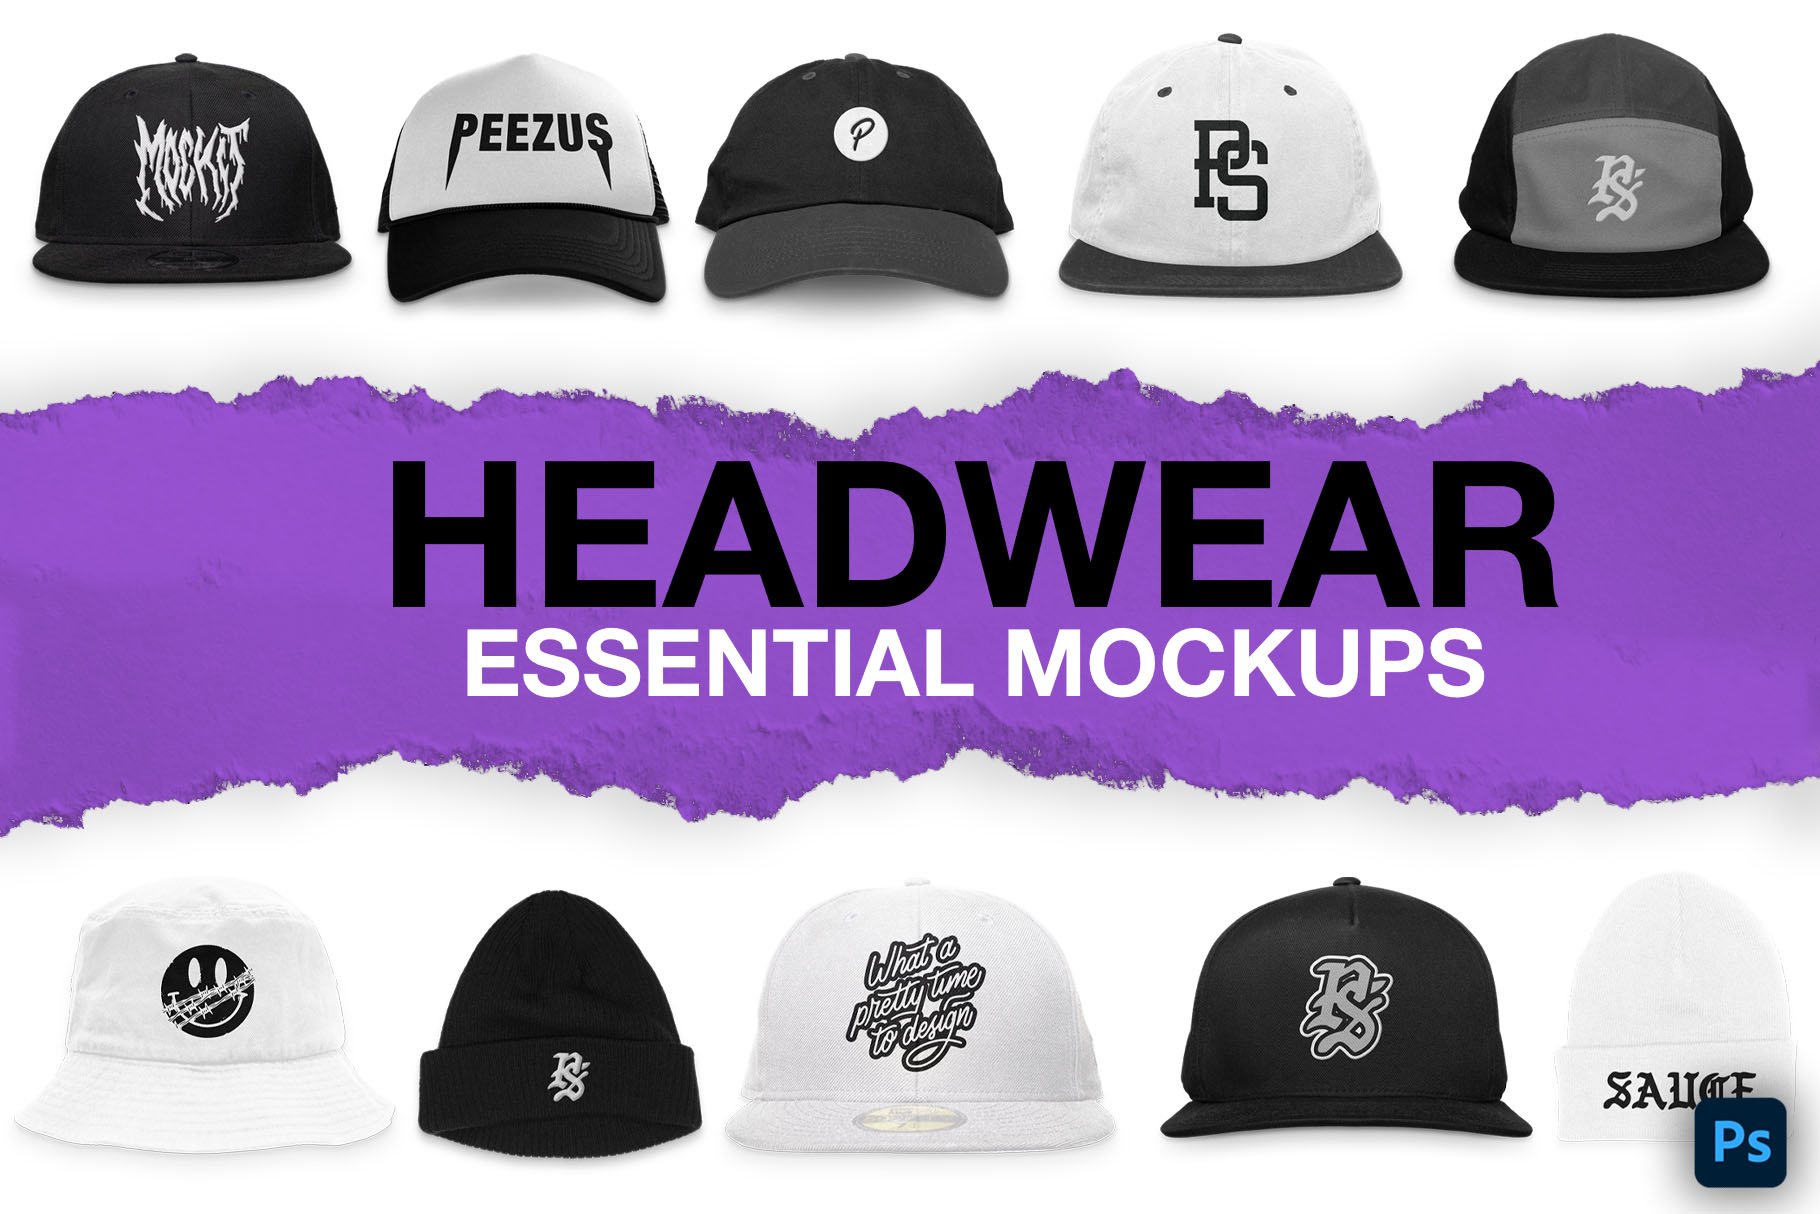 Headwear Mockup Essentials cover image.